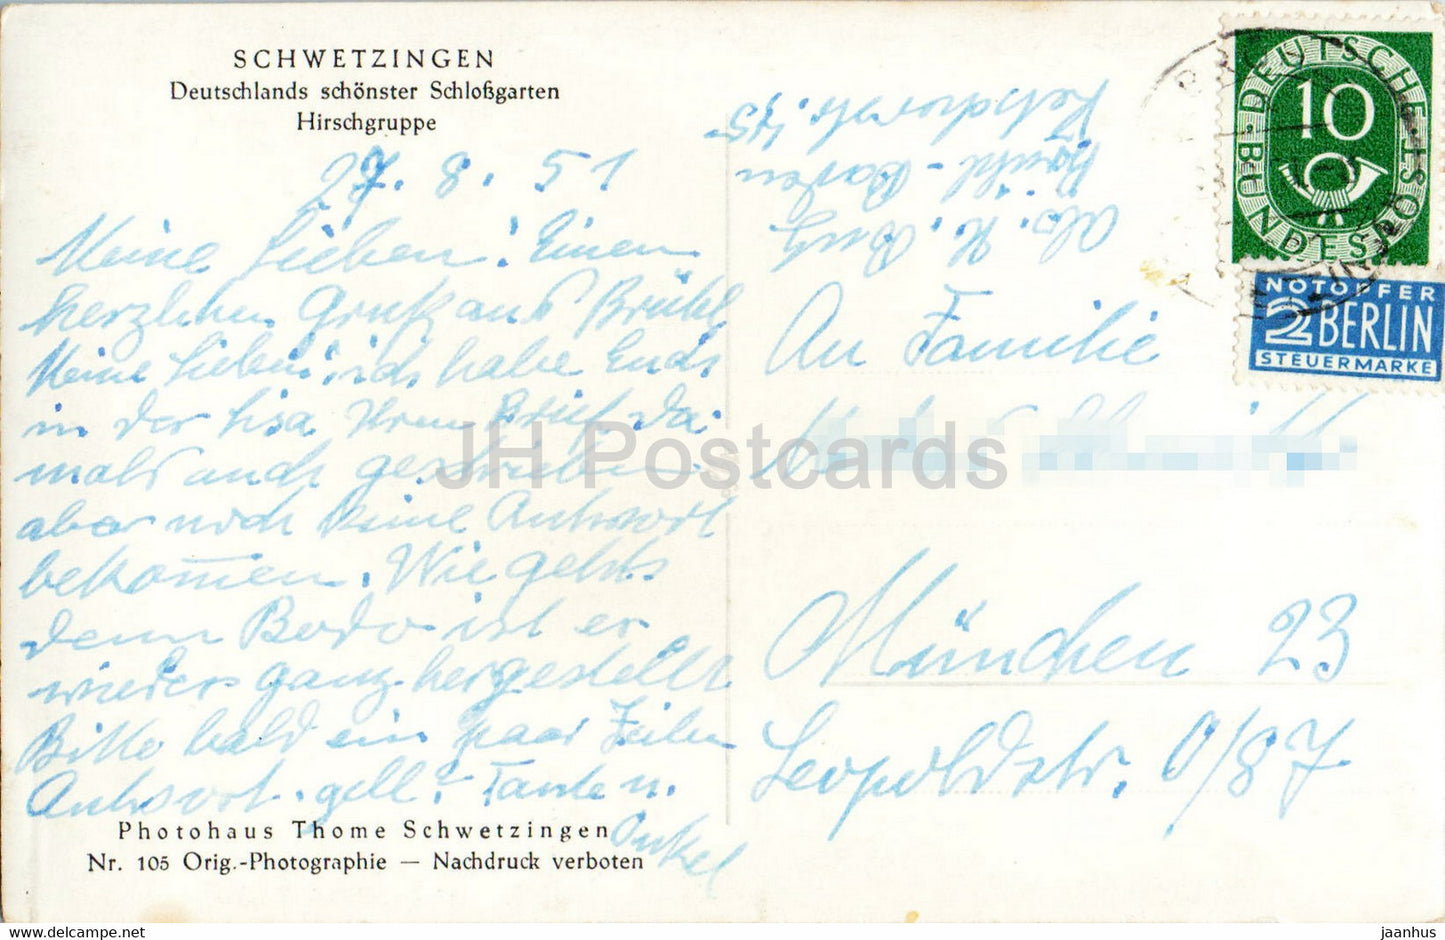 Schwetzingen - Deutschlands schonster Schlossgarten - Hirschgruppe - old postcard - 1951 - Germany - used